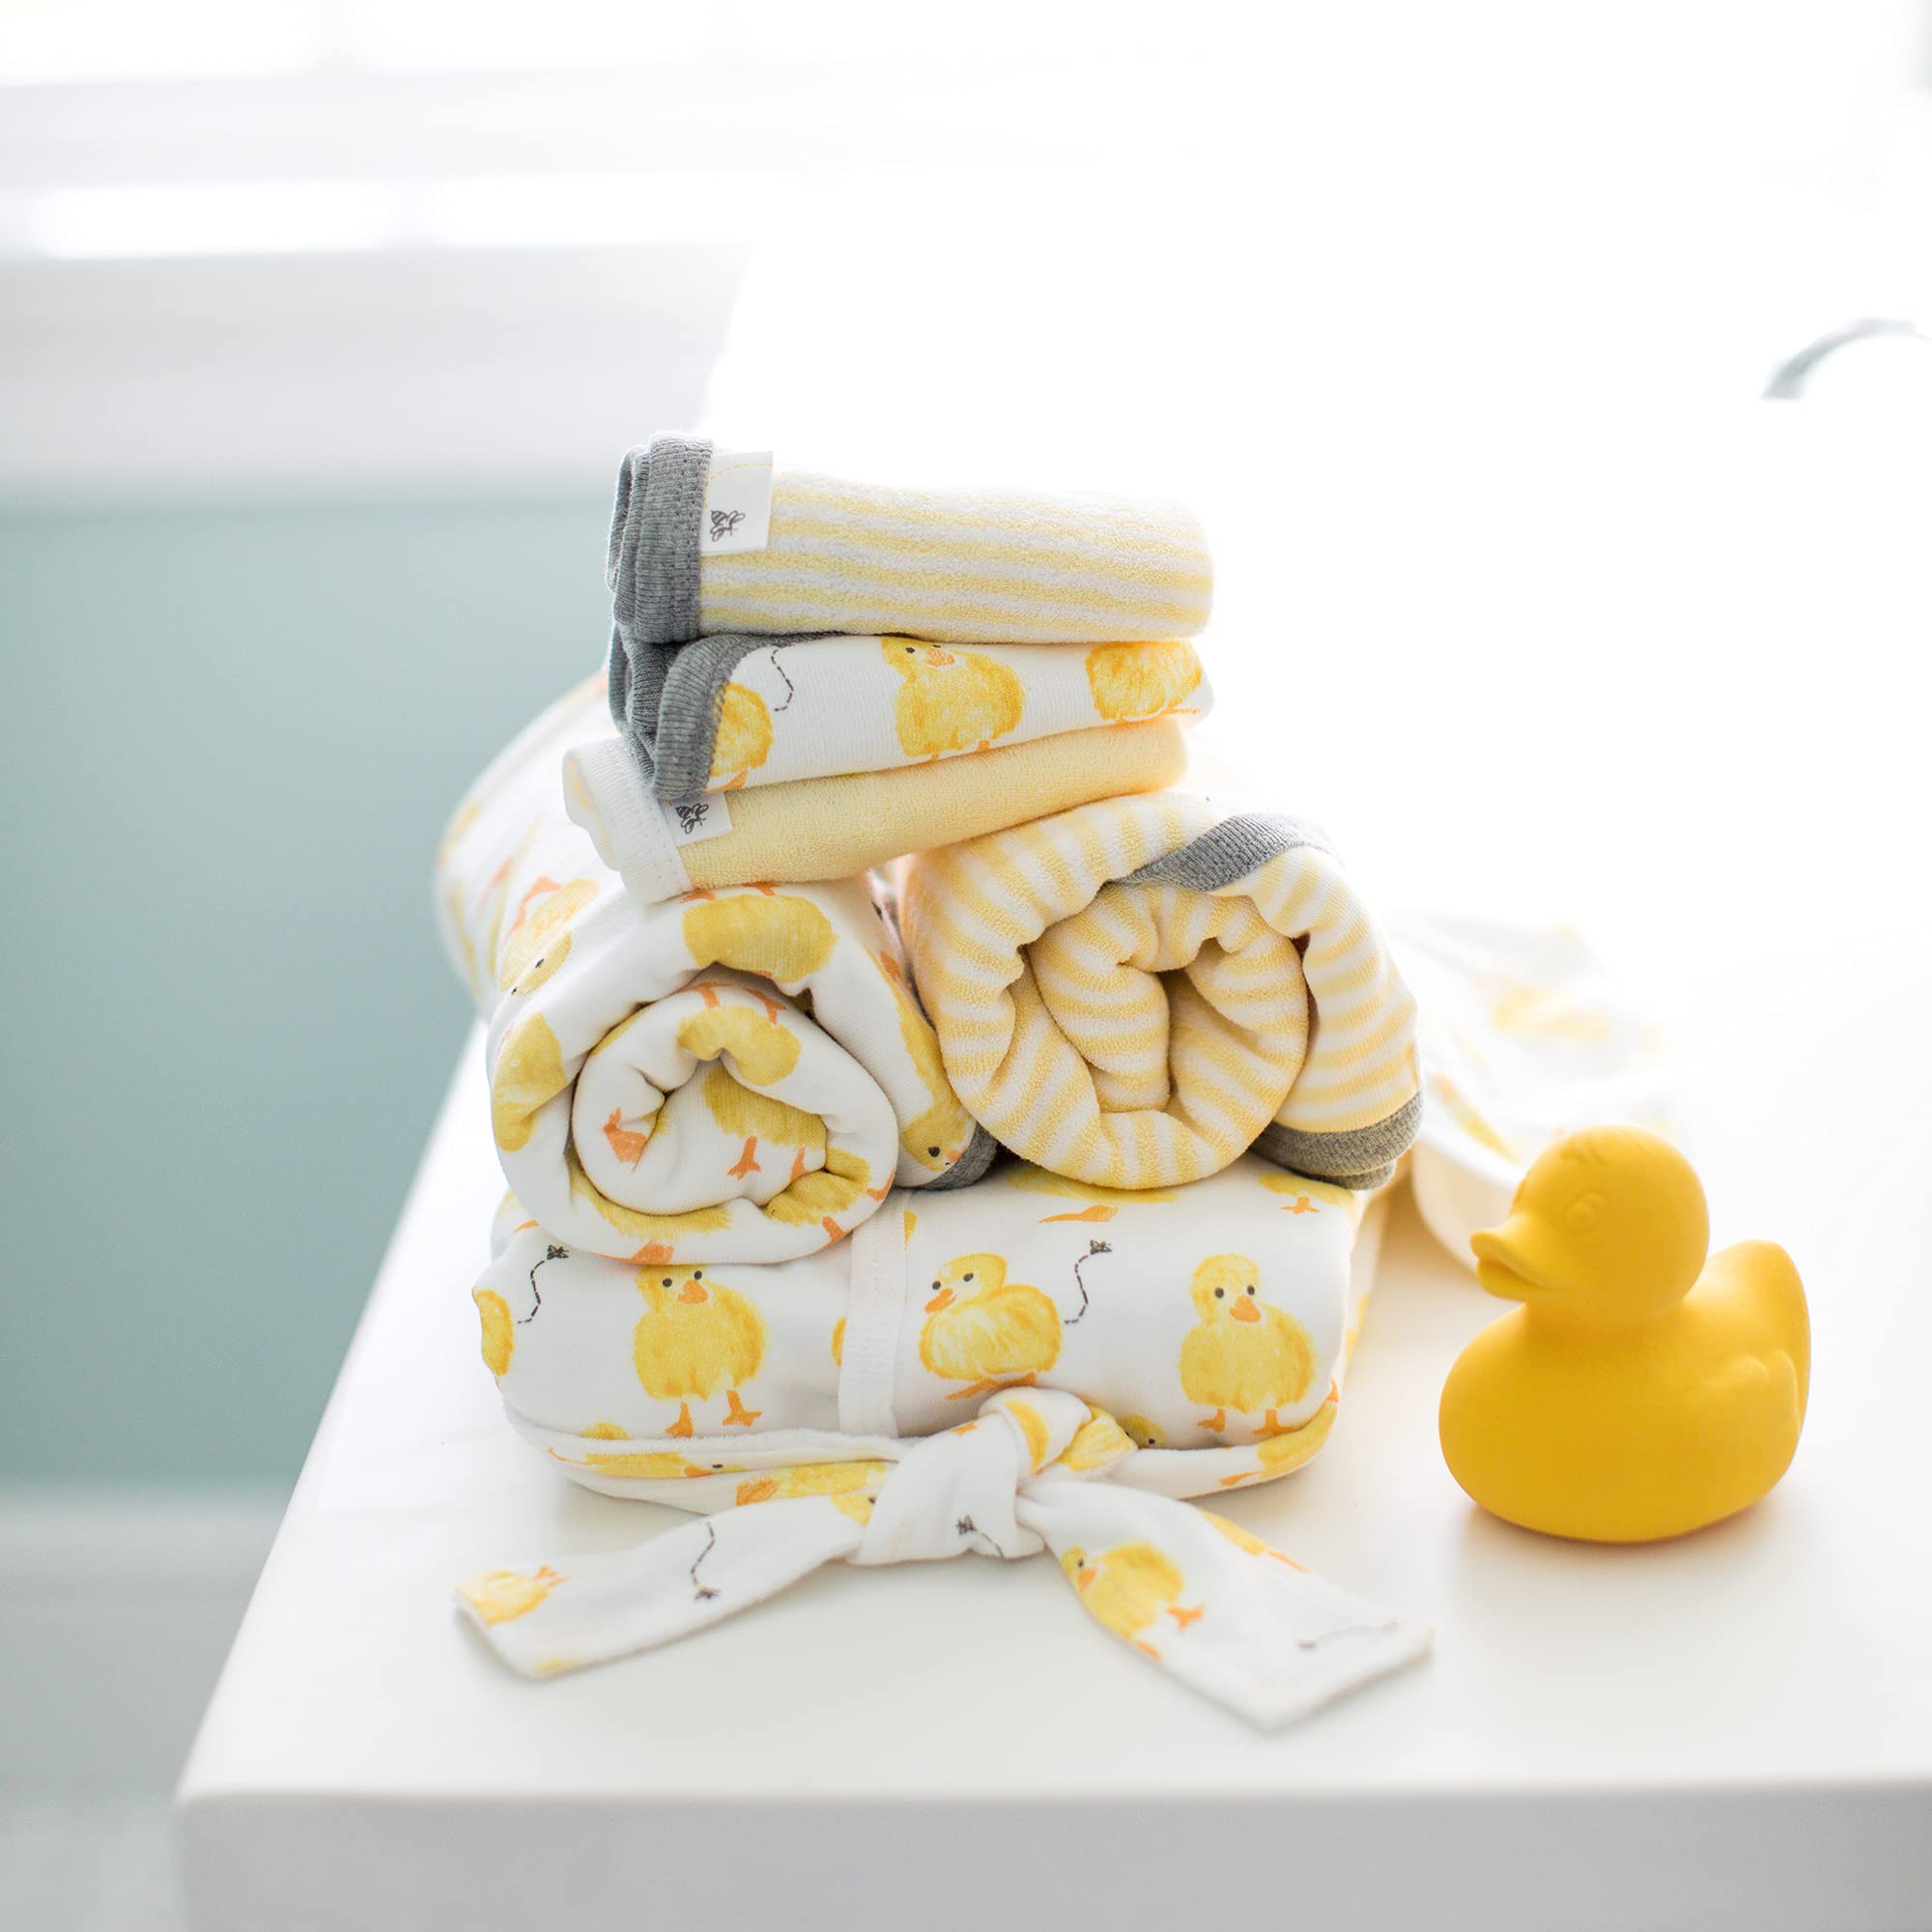 Burt's Bees Baby Bath Bundle- Hooded Towel, Washcloths & Robe Gift Set, 100% Organic Cotton